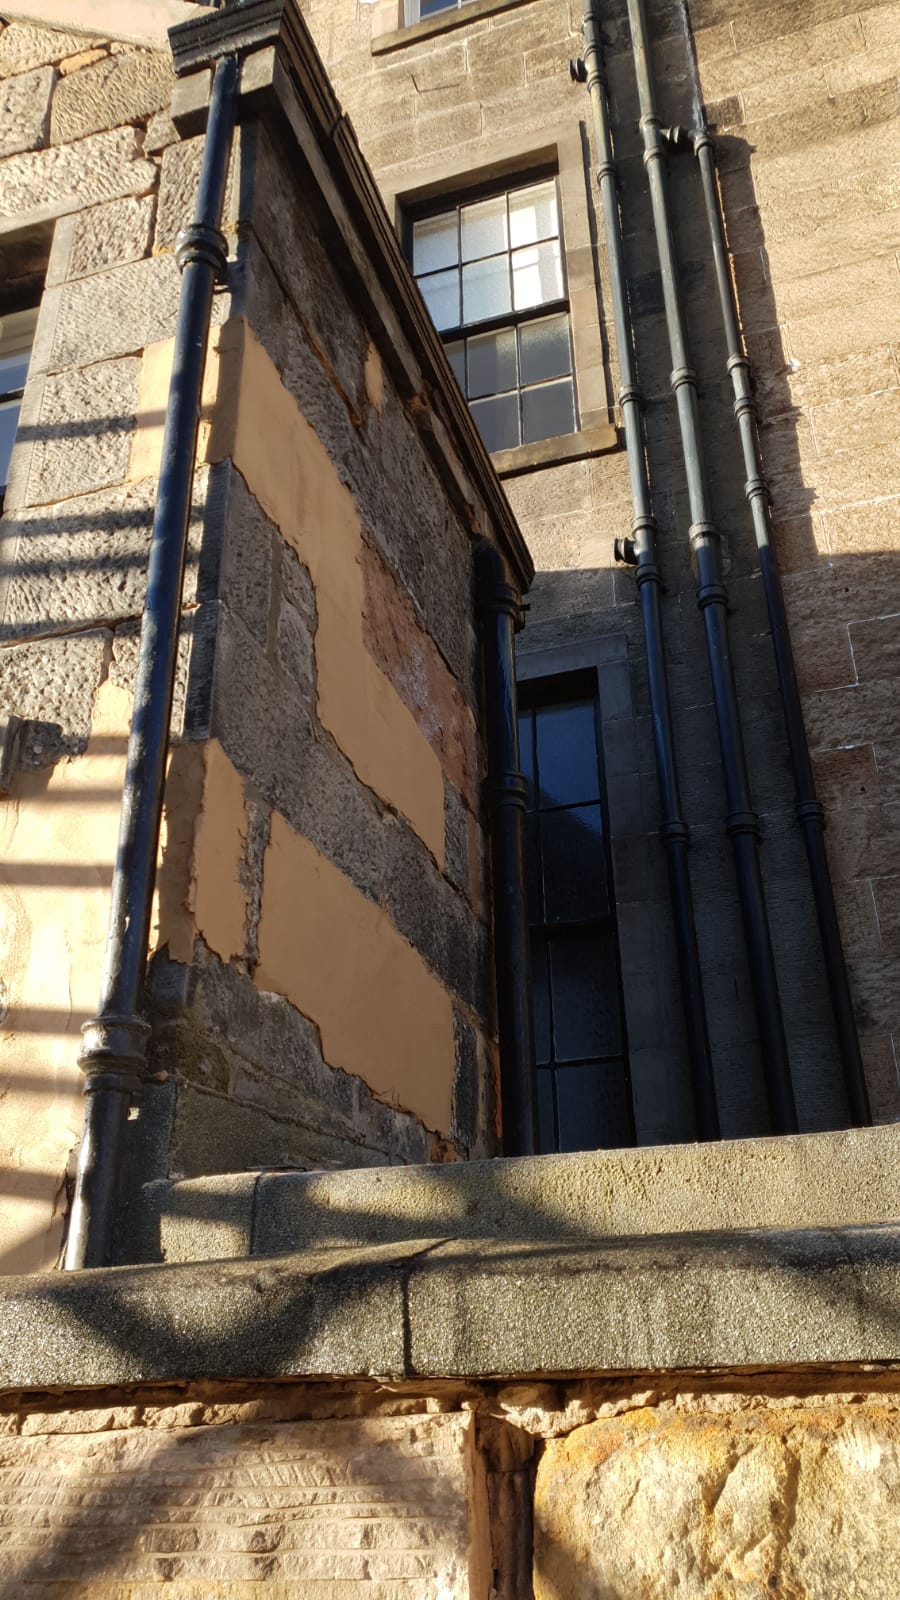  Townhouse Restoration Project, West End, Glasgow.